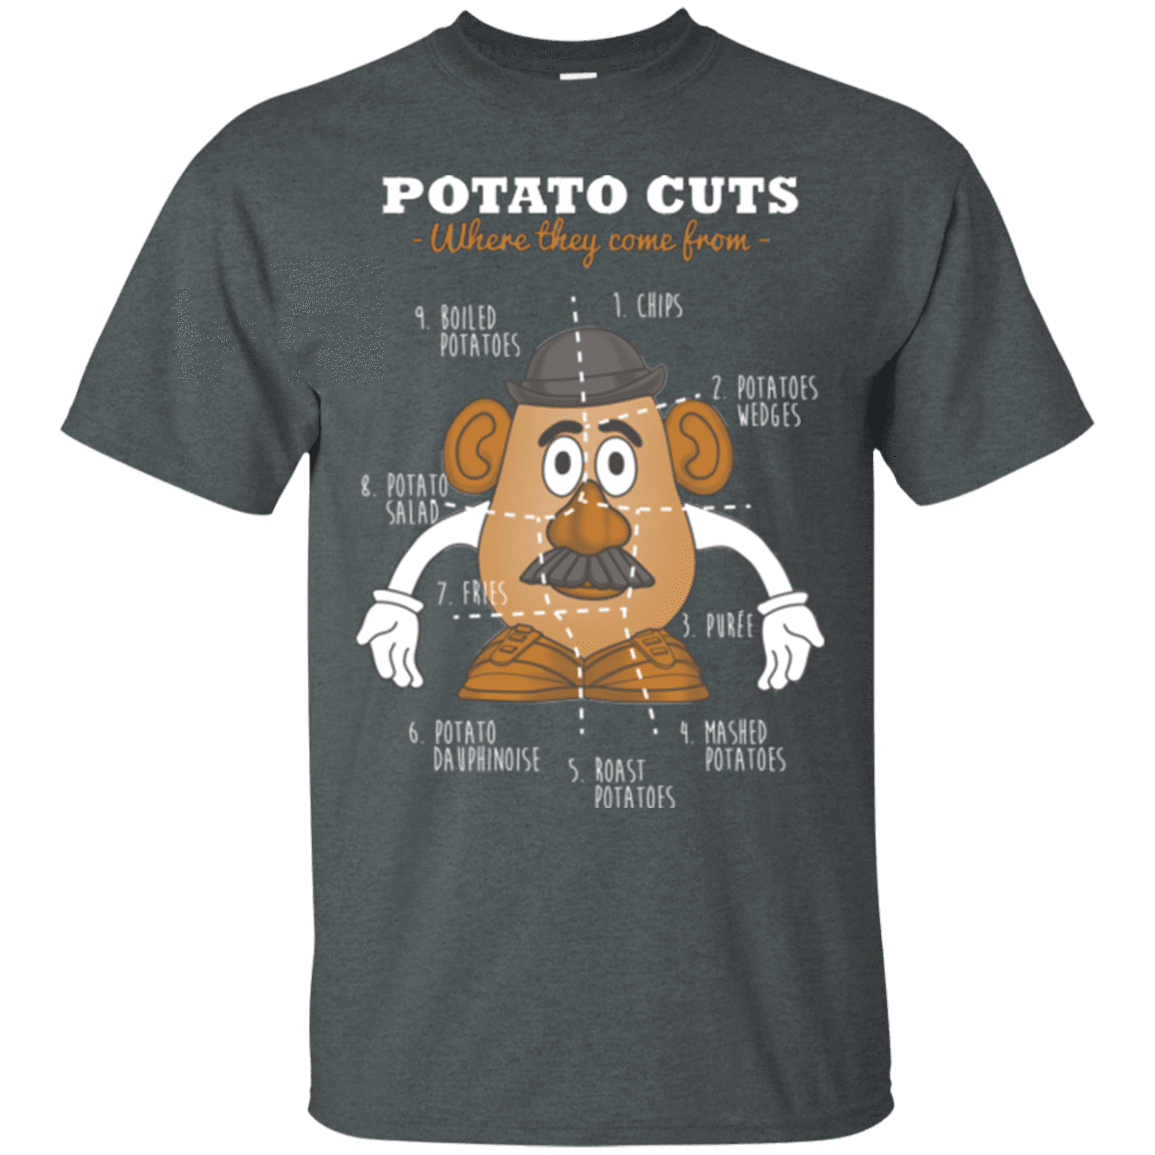 T-Shirts Dark Heather / Small A Potato Anatomy T-Shirt